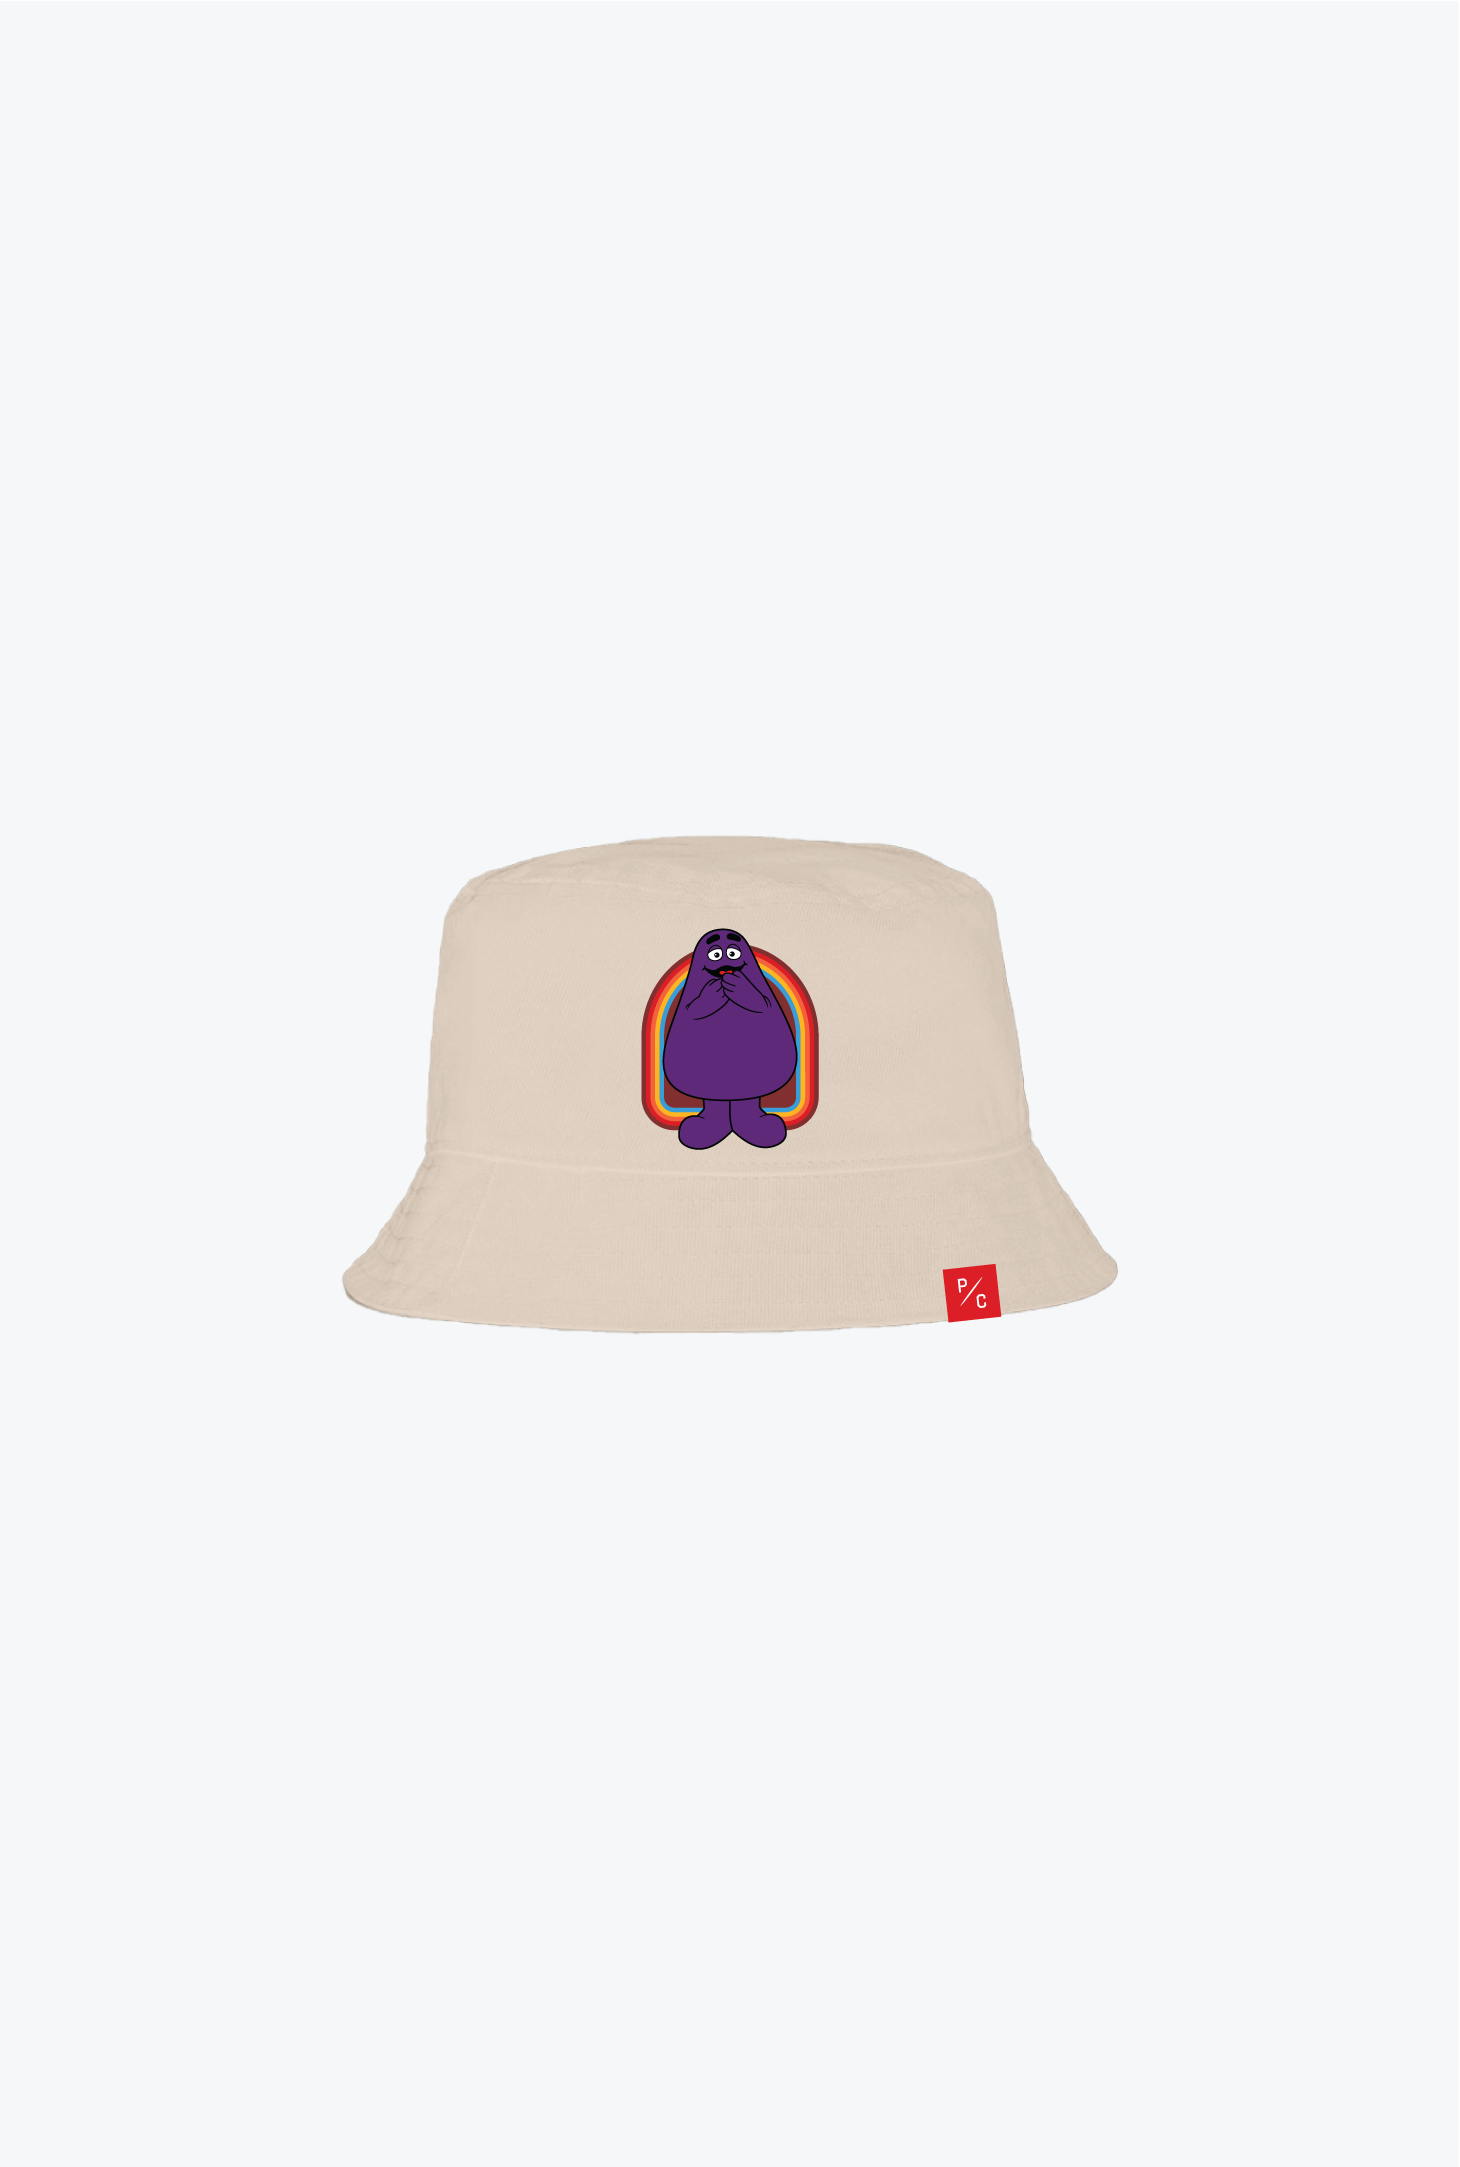 P/C x McDonald's Retro Grimace Bucket Hat - Ivory